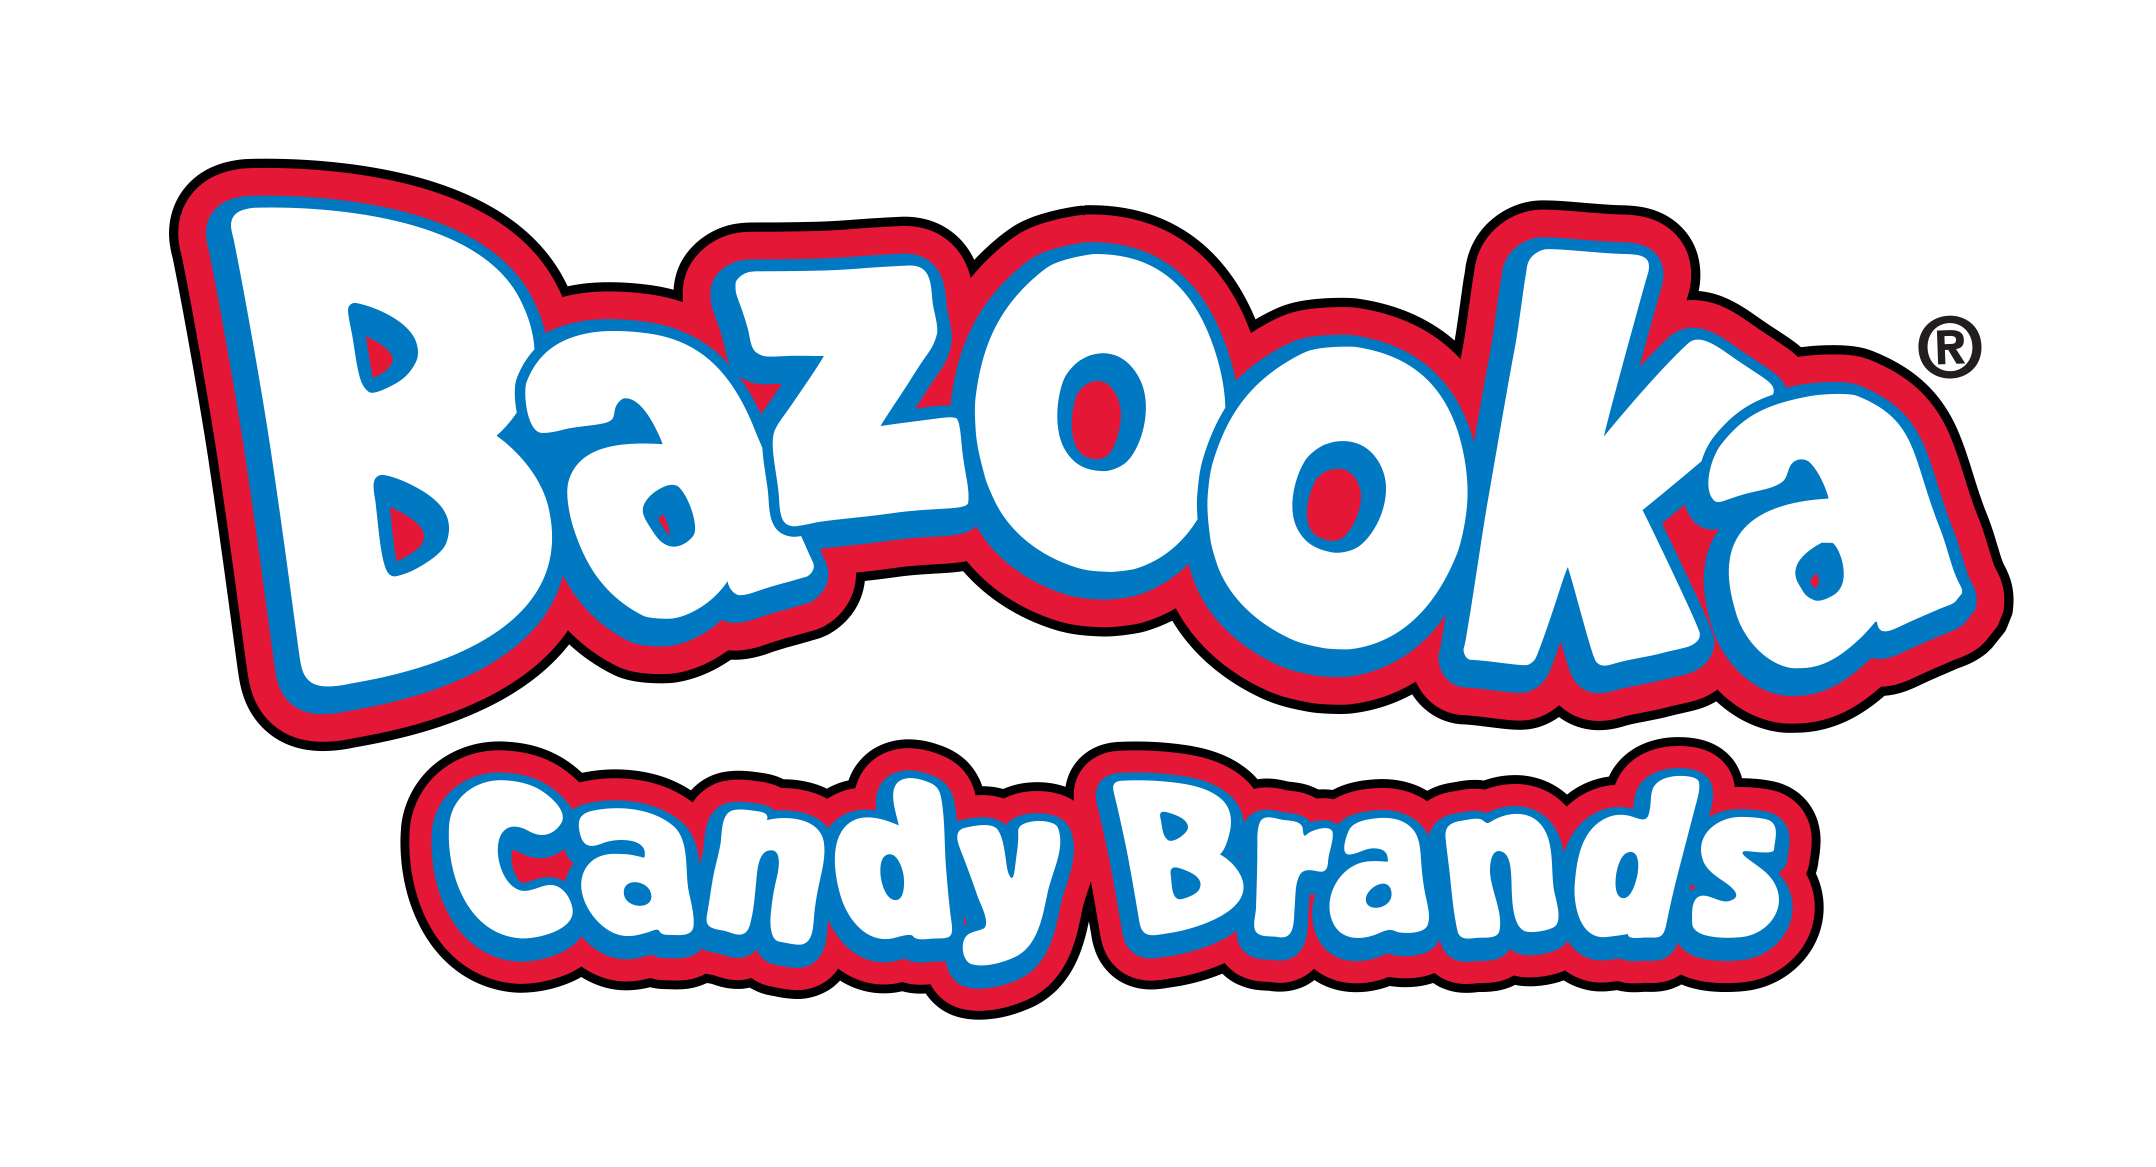 Bazooka Candy